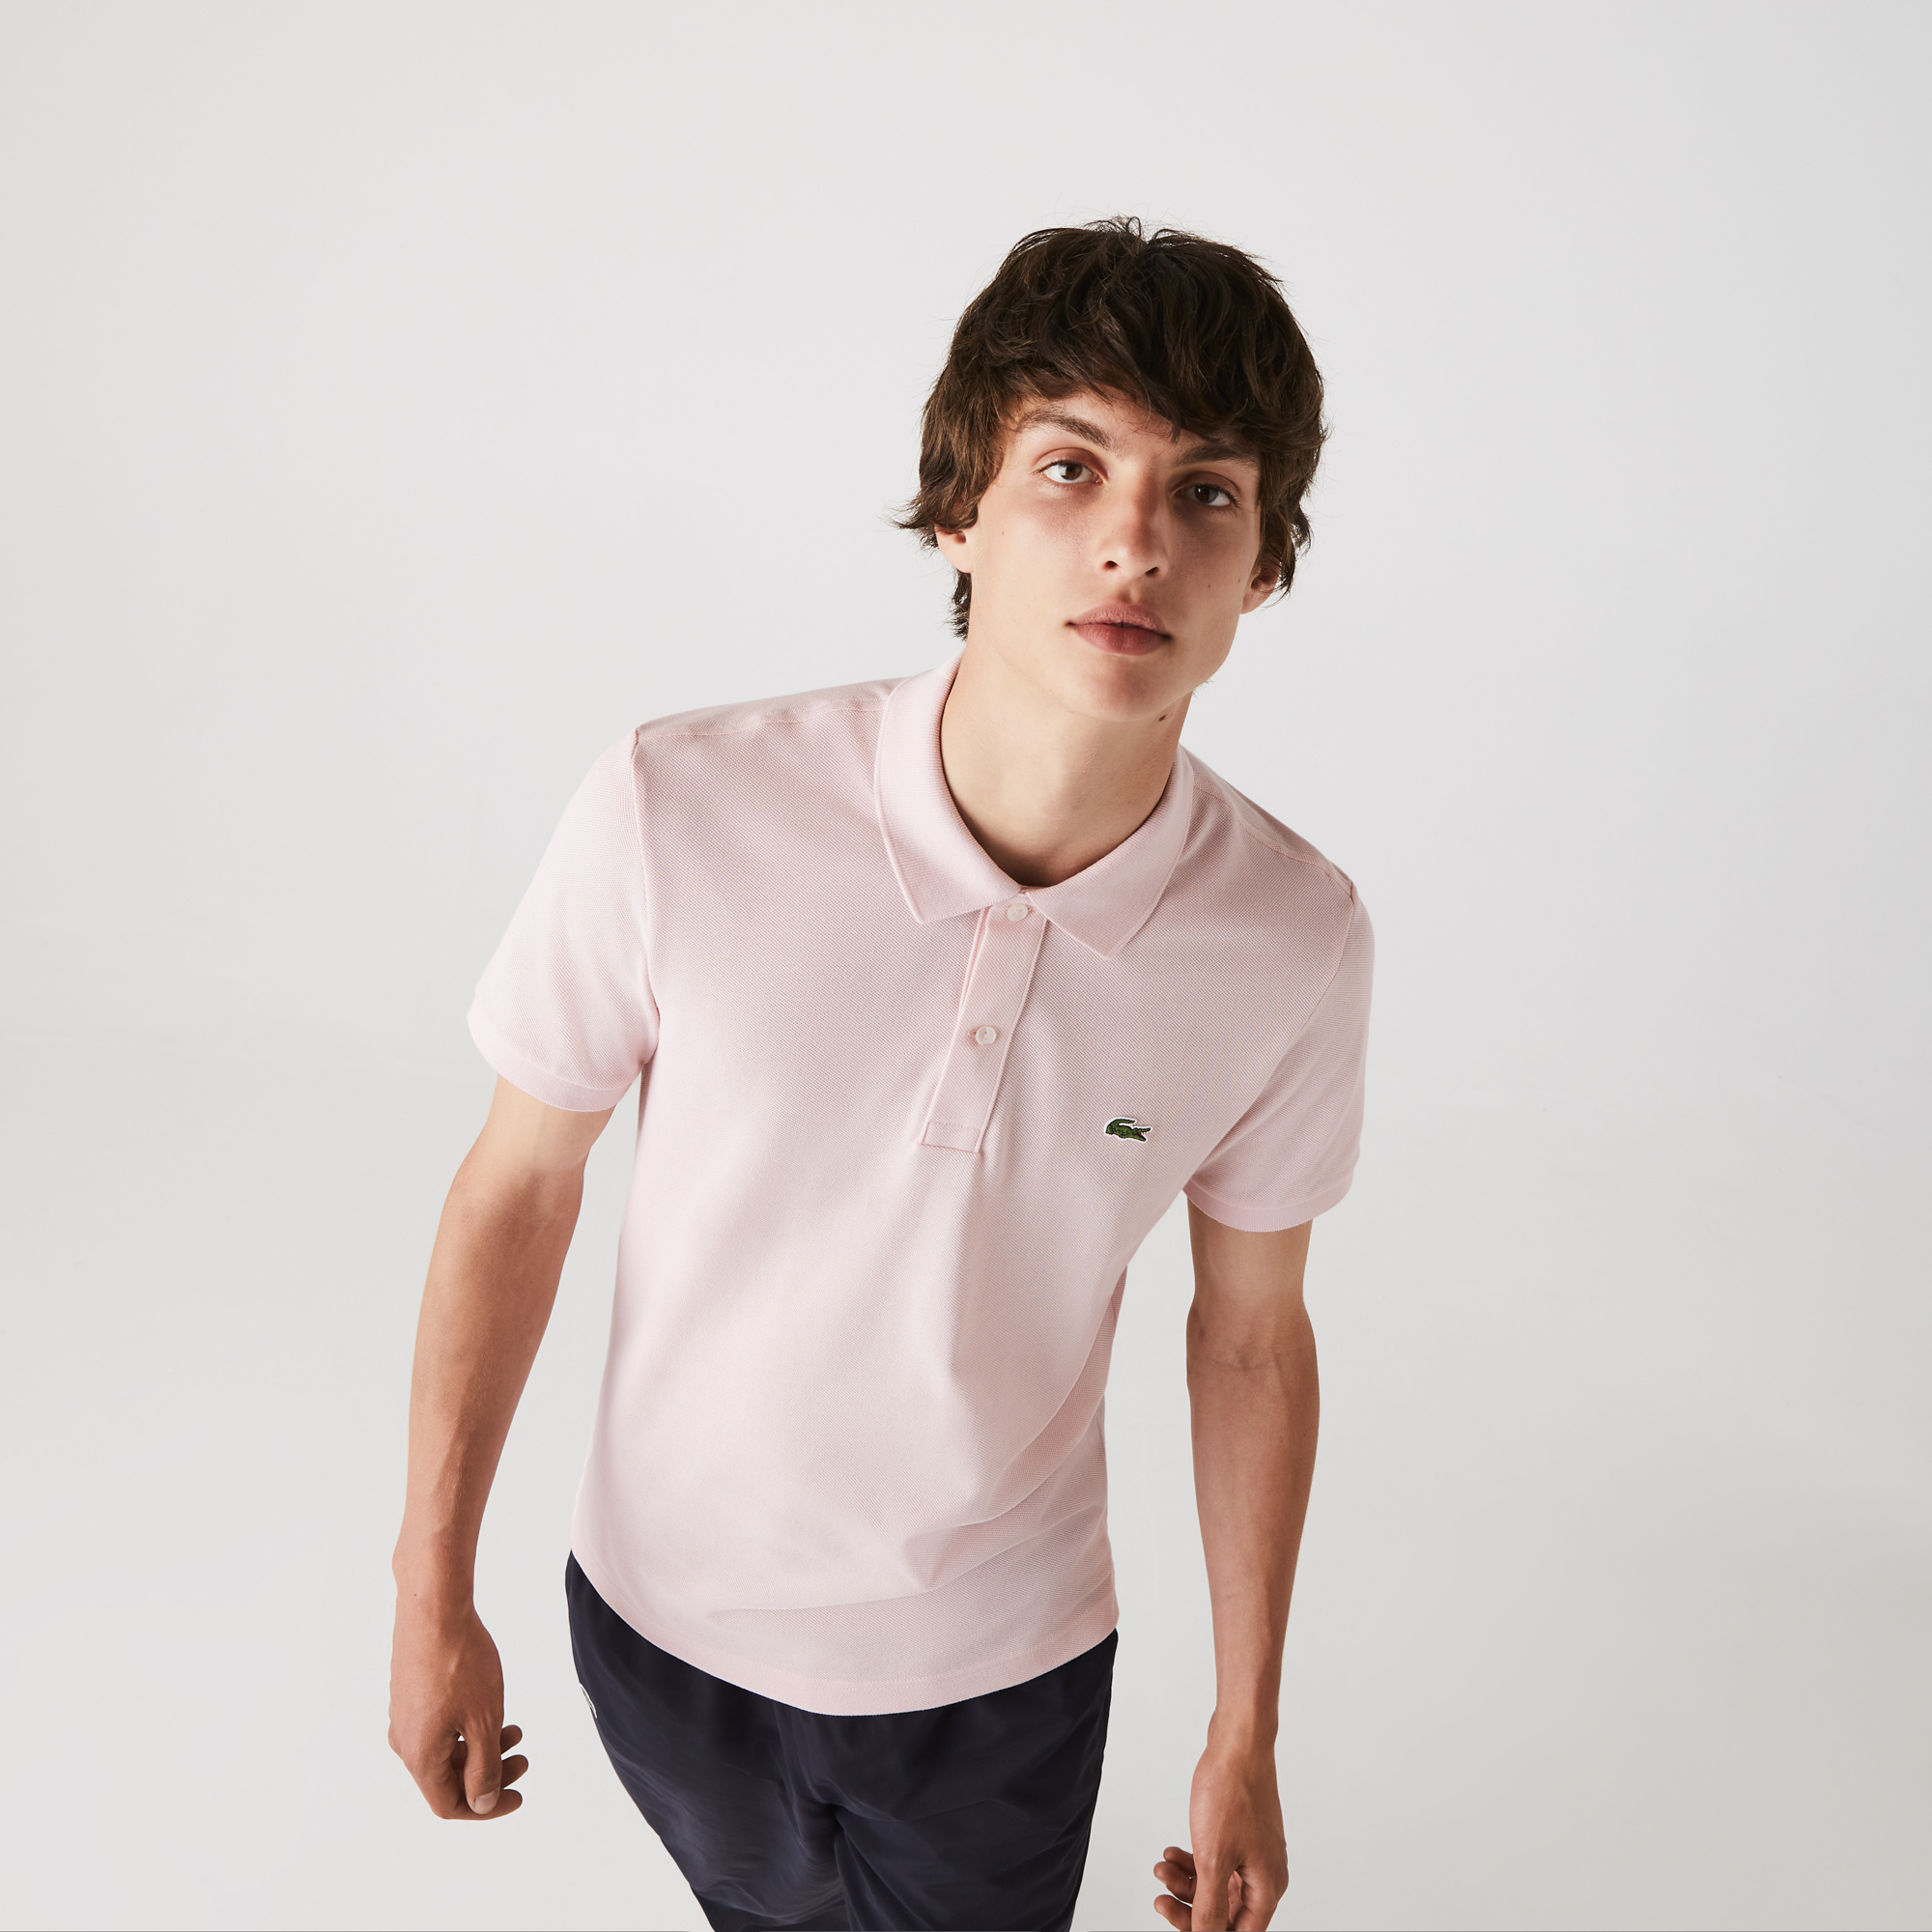 Lacoste Men's Slim Fit Light Pink Polo